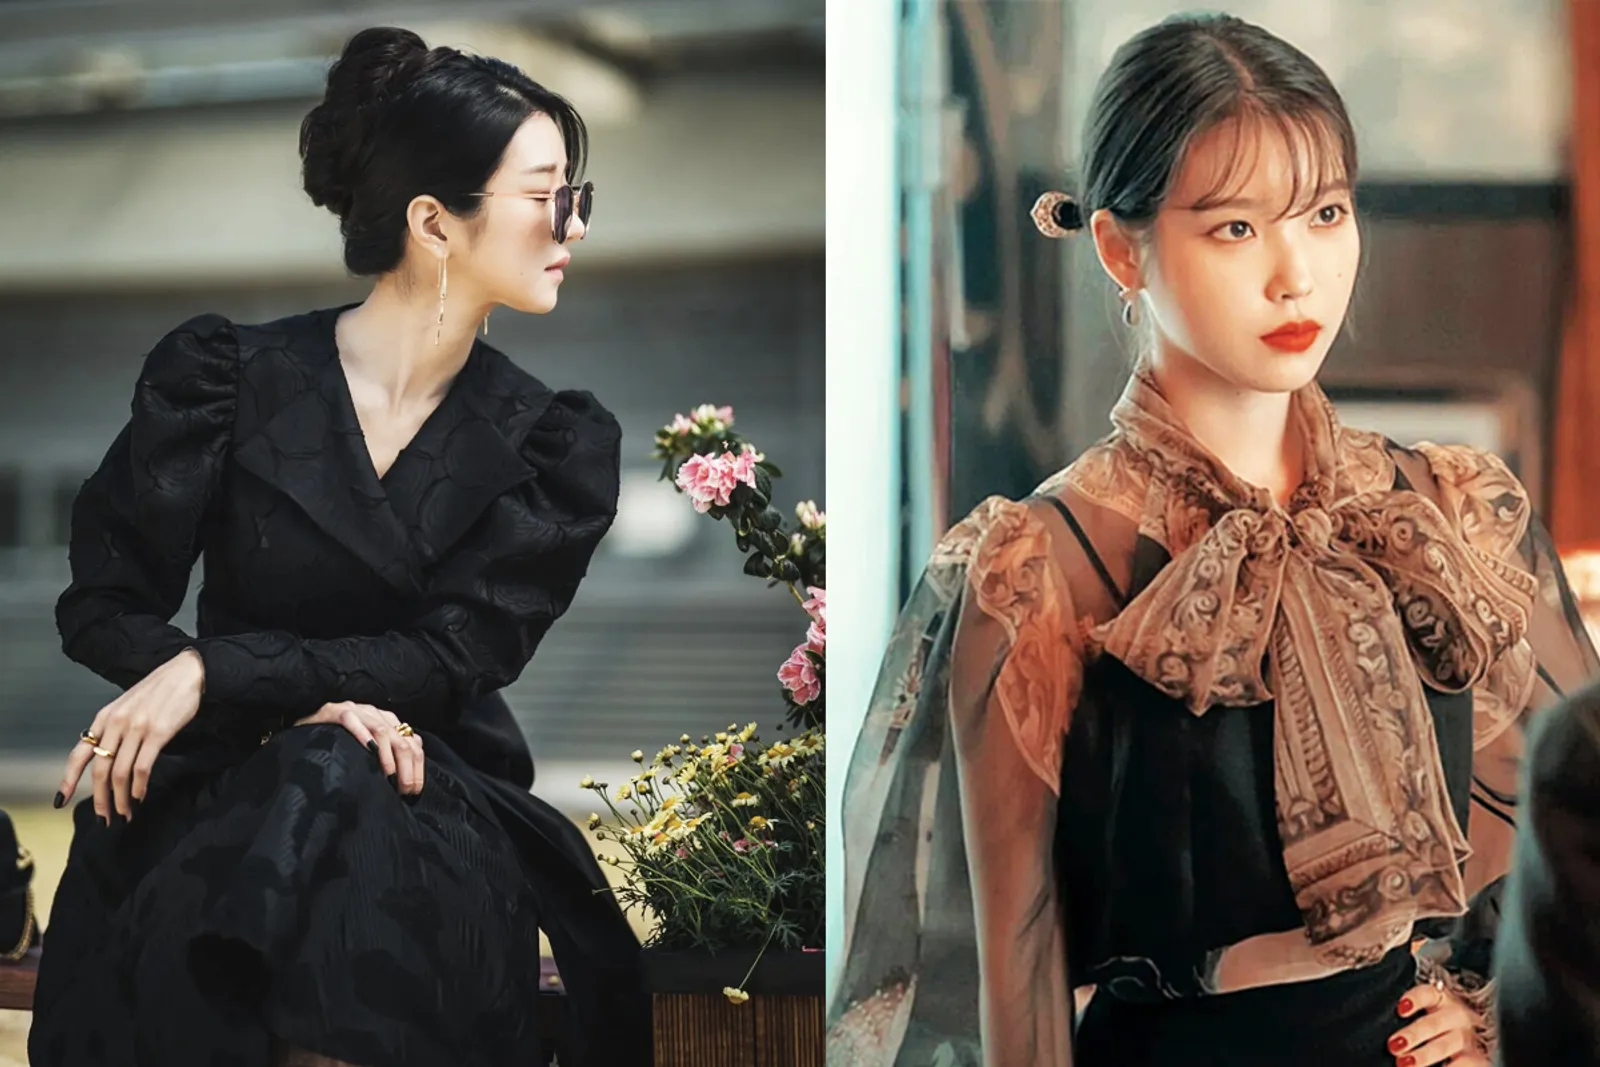 Tampil Manis dengan Outfit Kantor a la Tokoh Drama Korea